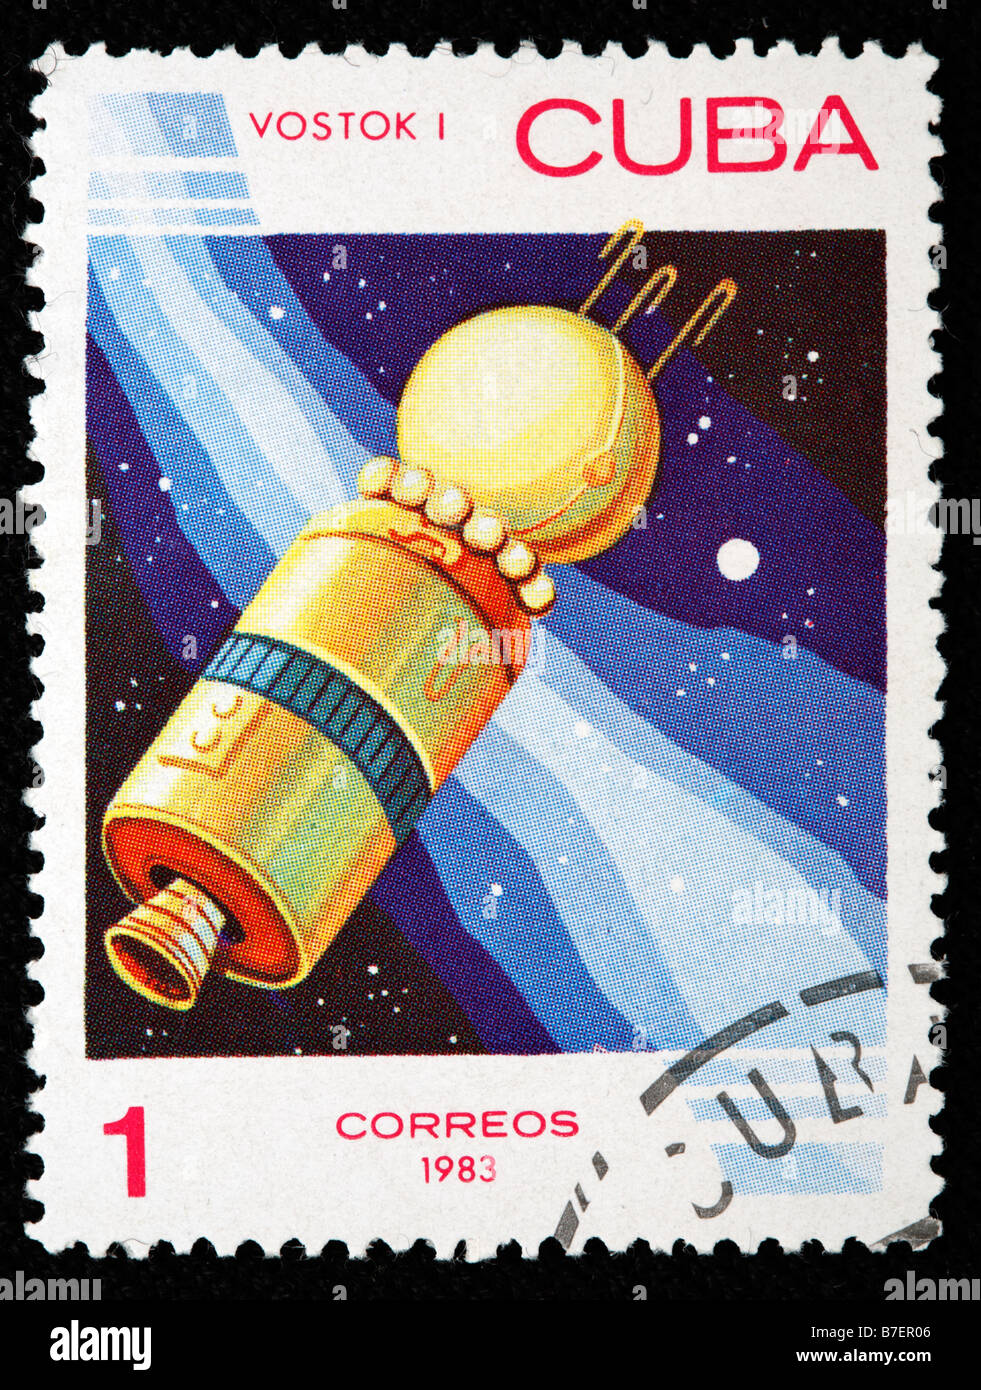 Soviet space ship 'Vostok 1', postage stamp, Cuba, 1983 Stock Photo